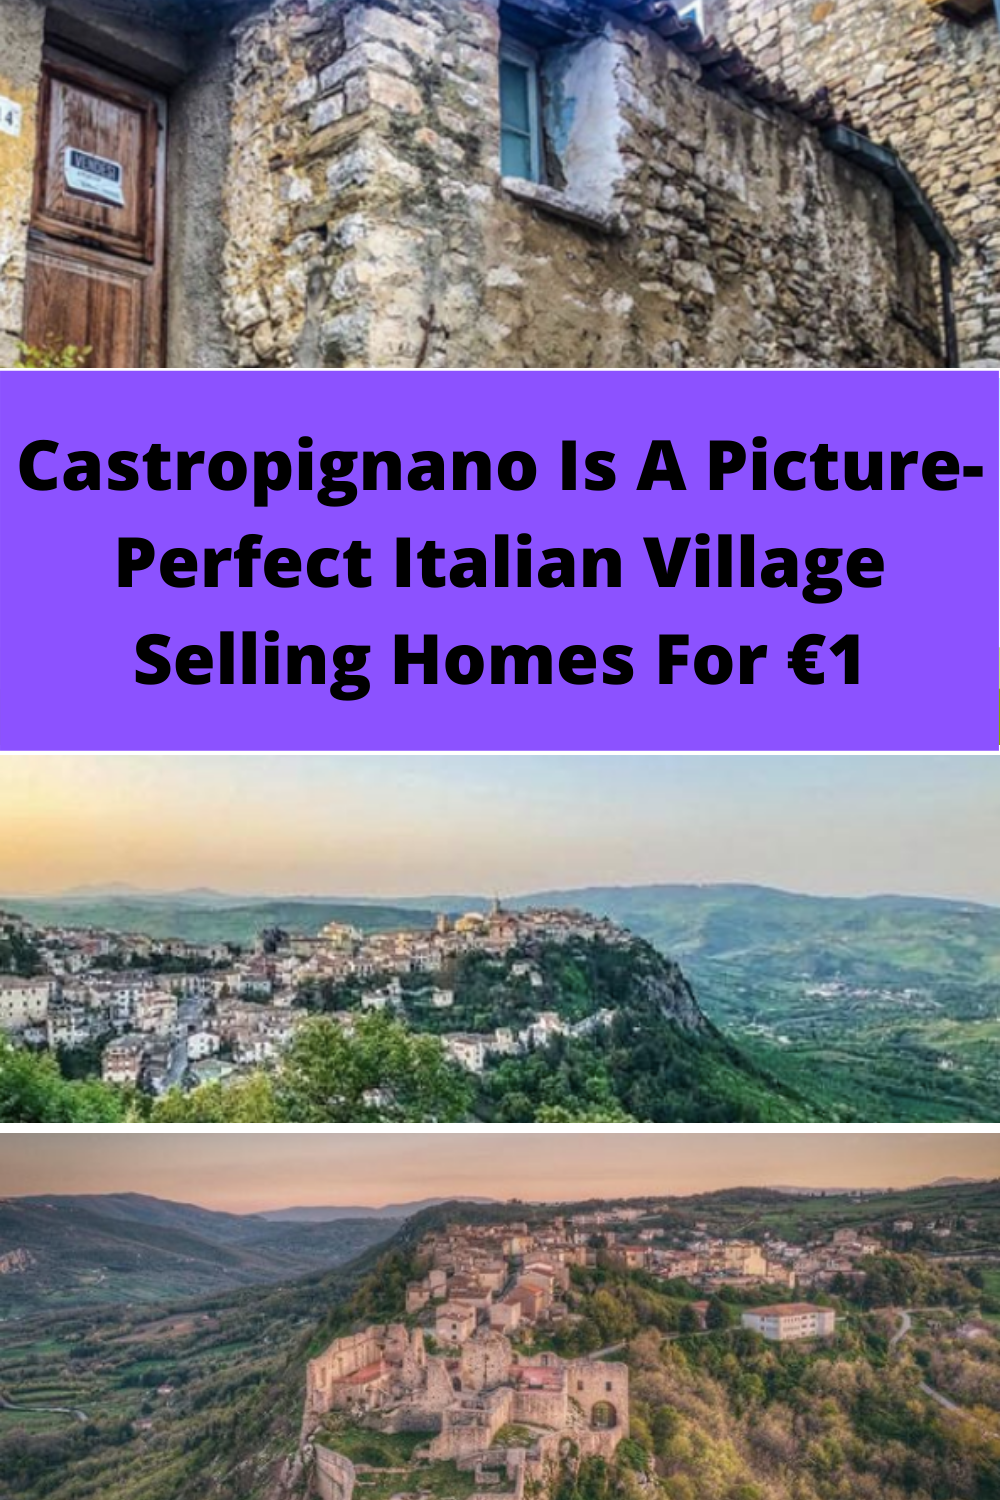 Castropignano Is A Picture-Perfect Italian Village Selling Homes For €1